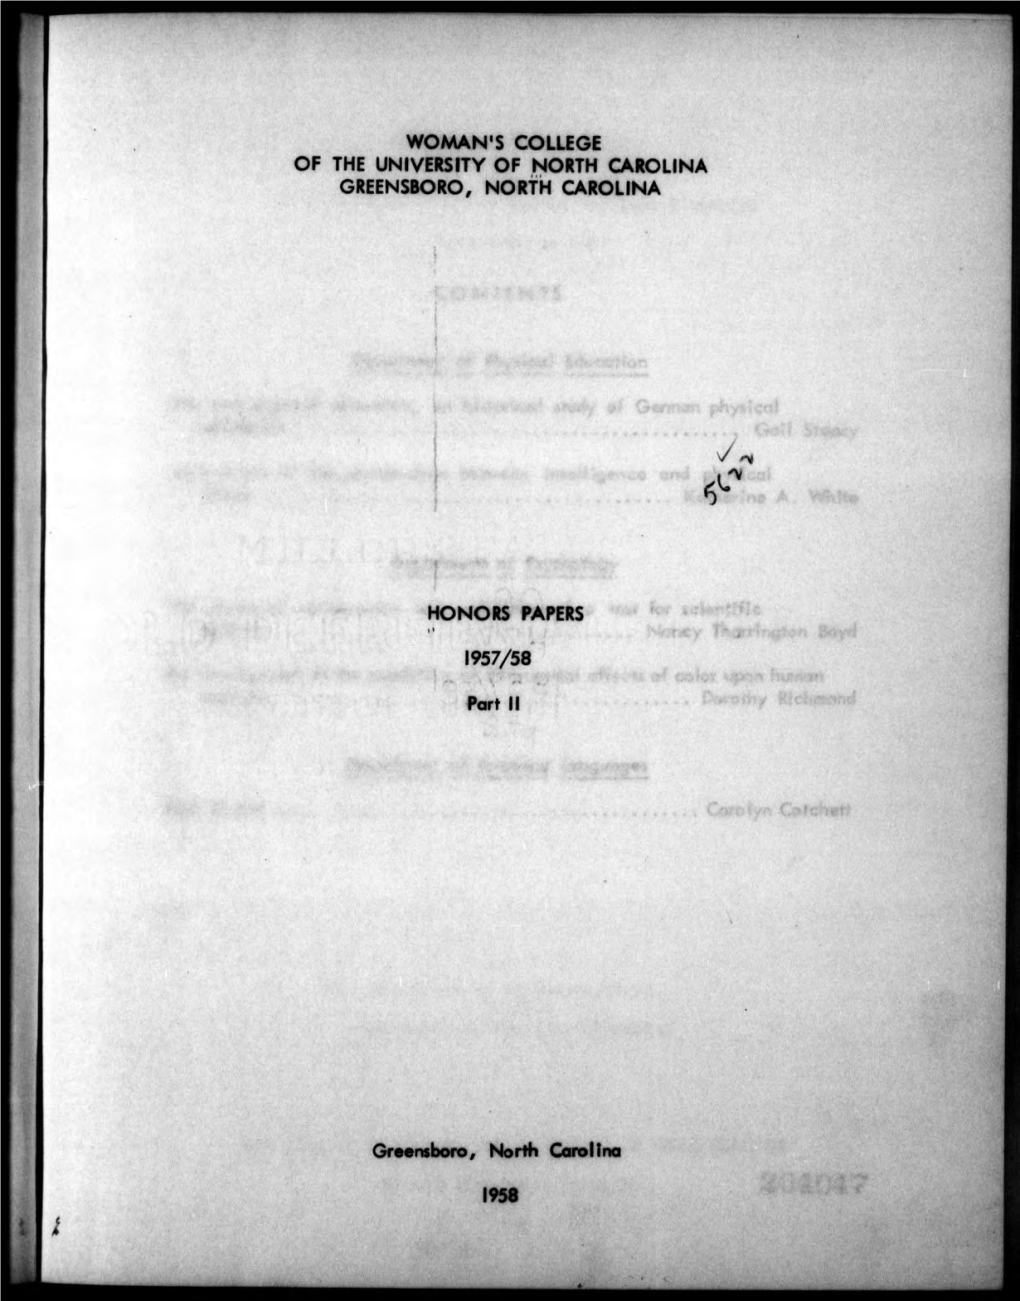 WOMAN's COLLEGE of the UNIVERSITY of NORTH CAROLINA GREENSBORO, NORTH CAROLINA HONORS PAPERS 1957/58 Part II 1958